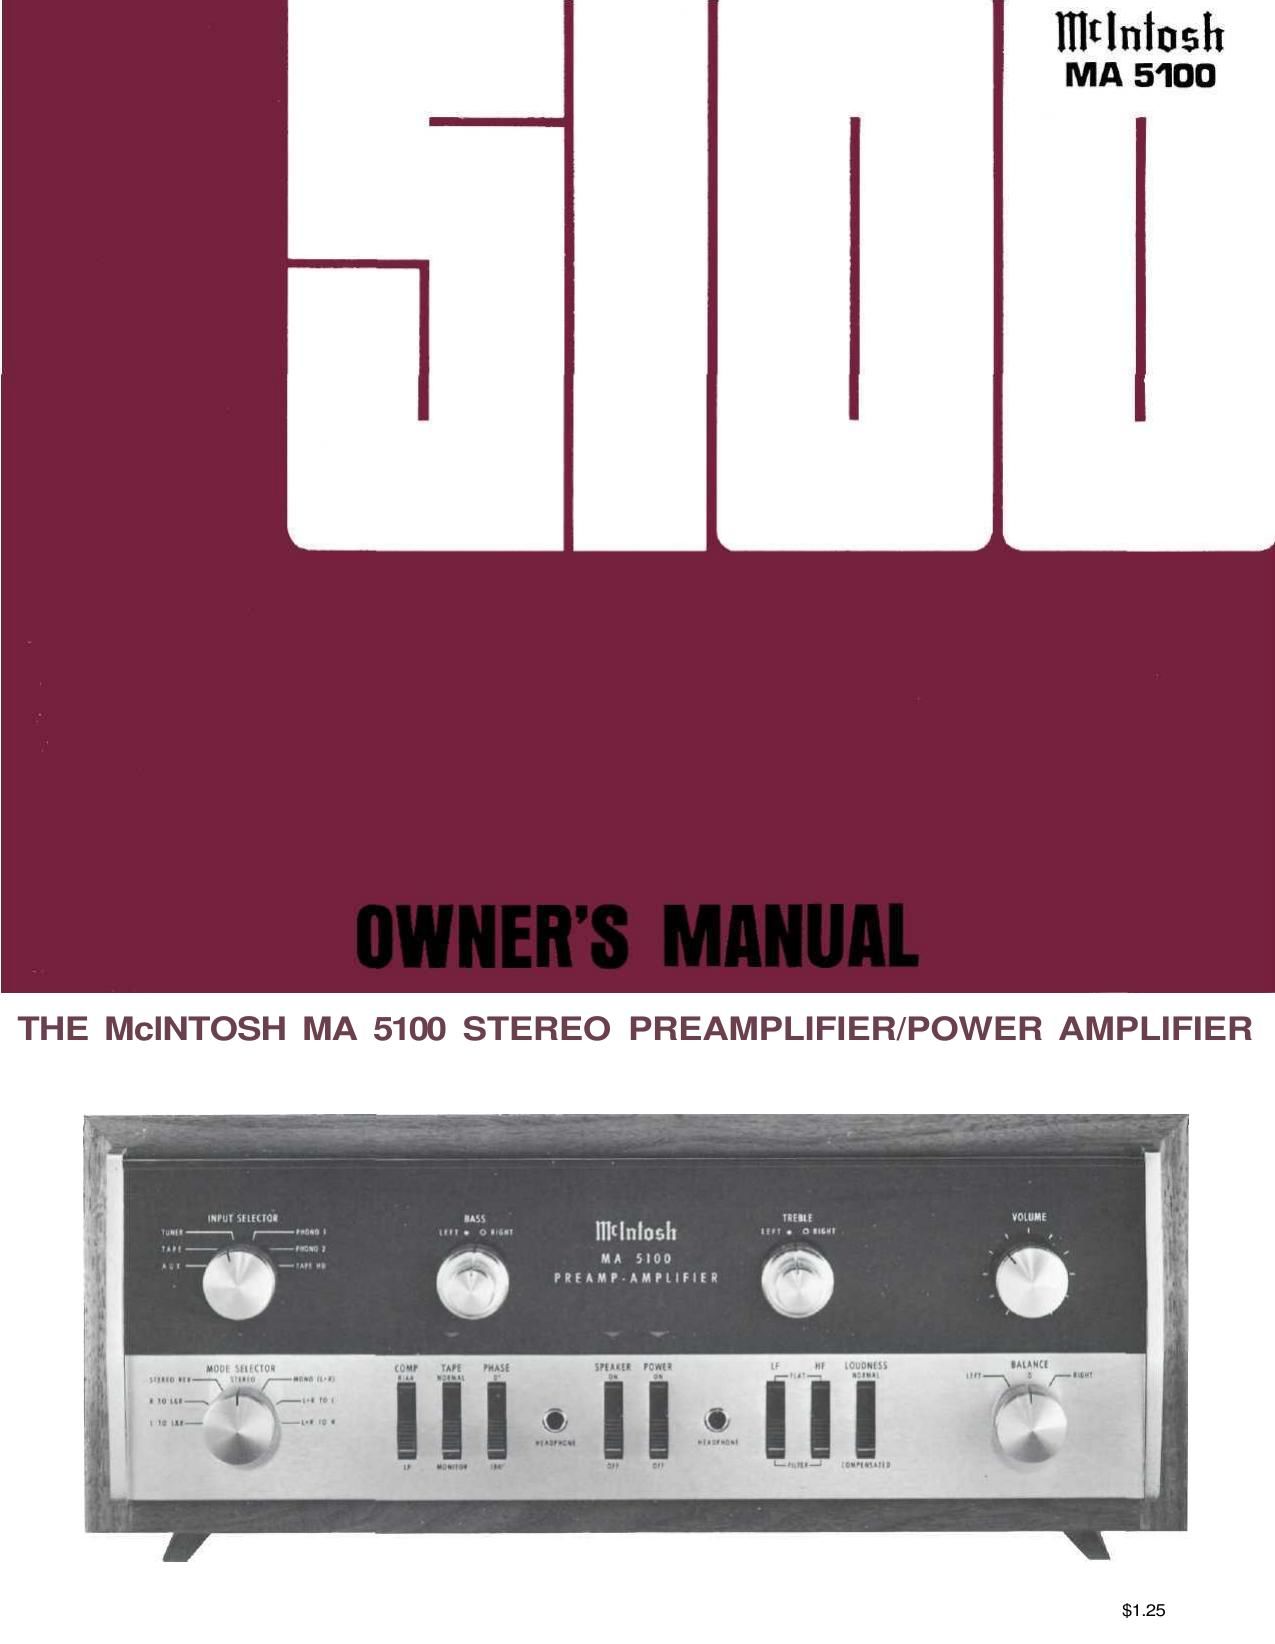 McIntosh MA 5100 Owners Manual